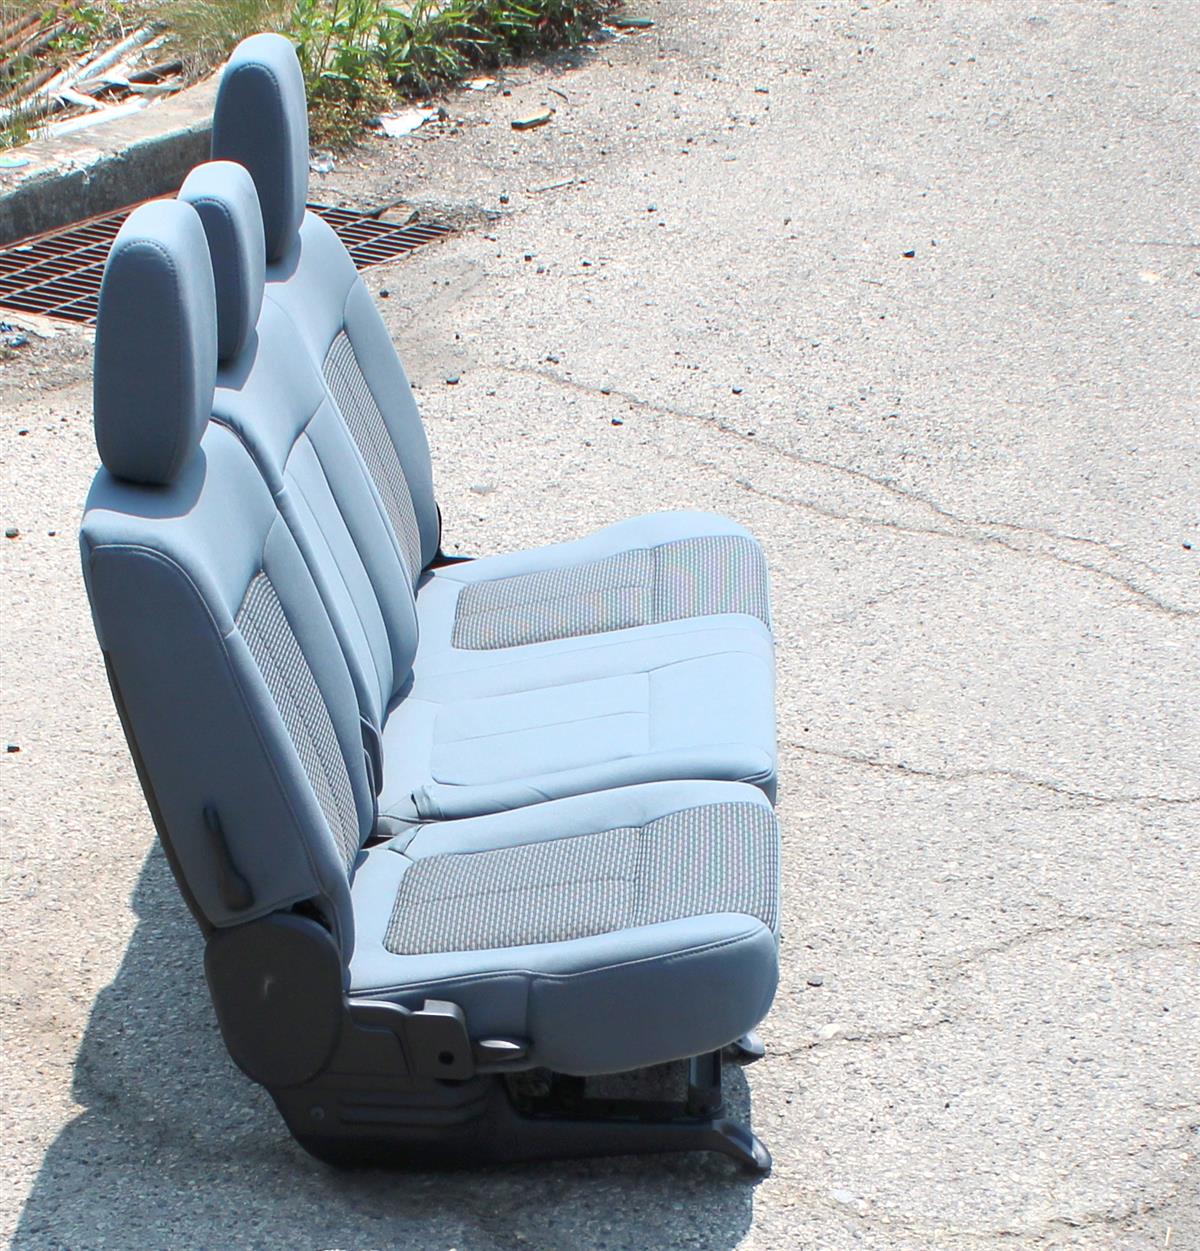 SP-2994 | _SP-2994 6040 Split Fold Down Vehicle Bench Seats  (21).JPG